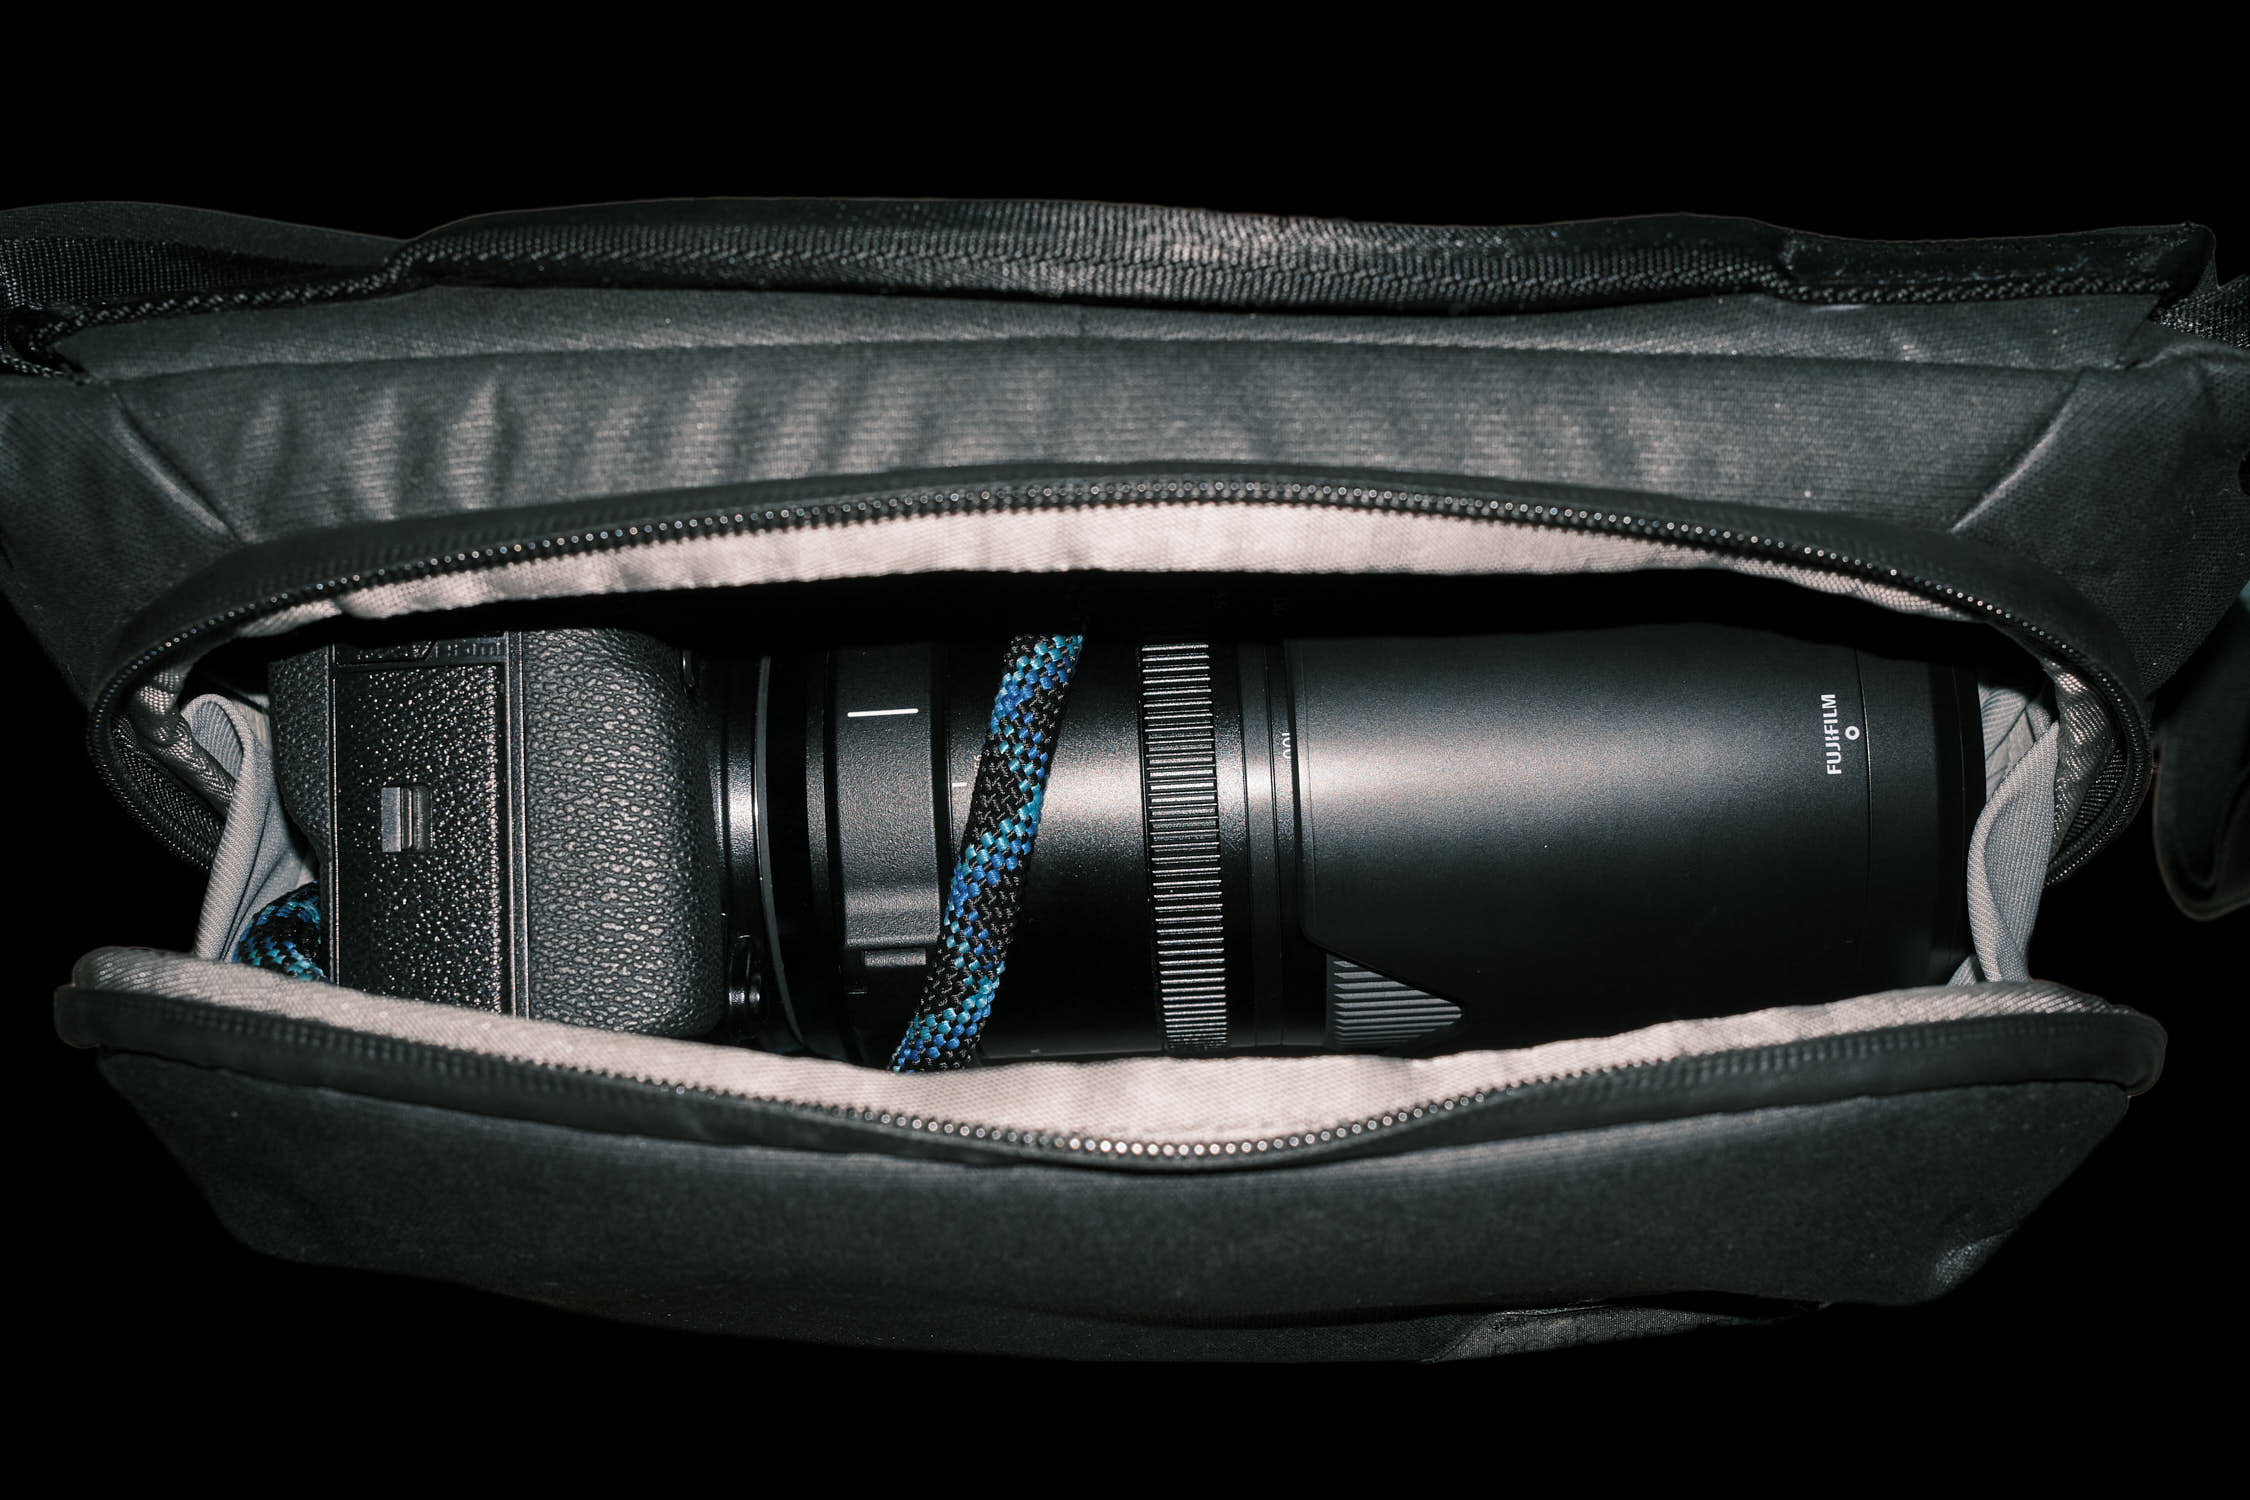 Peak Design 6L Sling inside with GFX50R and lens